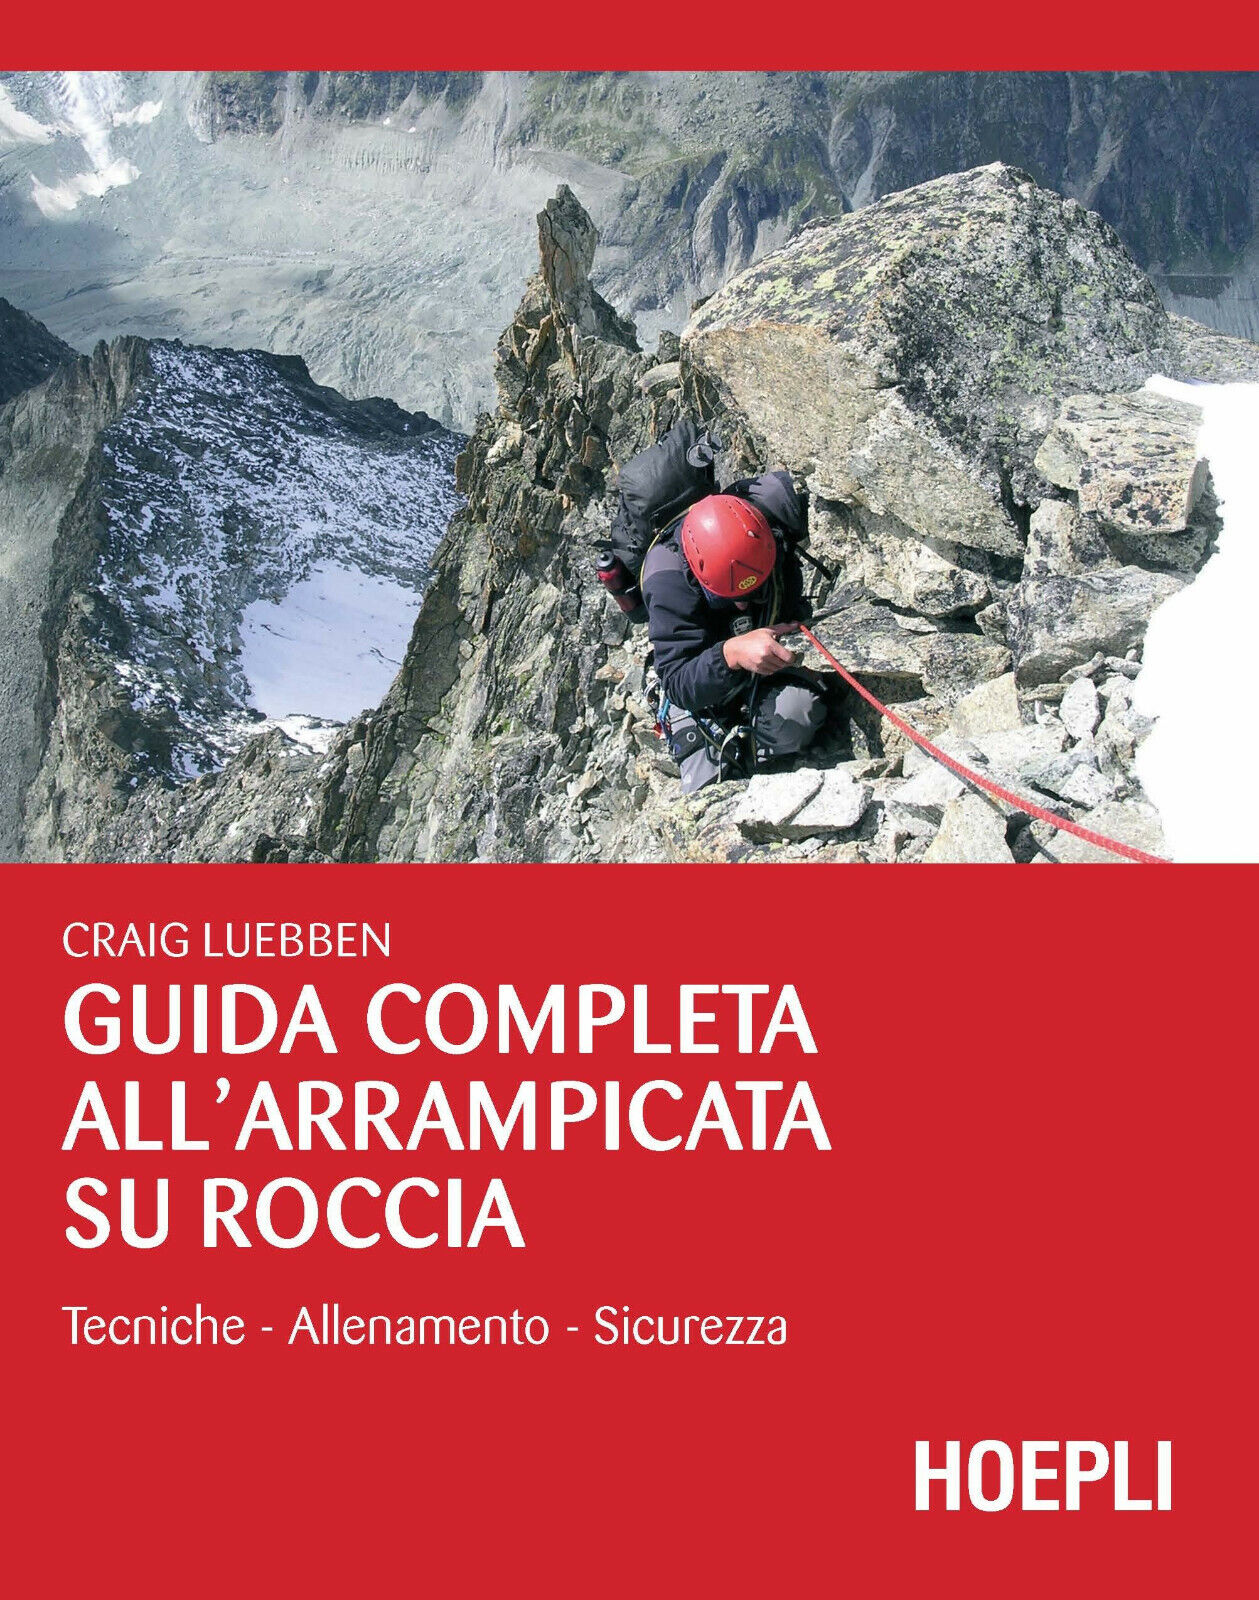 Guida completa all'arrampicata su roccia - Craig Luebben - Hoepli, 2007